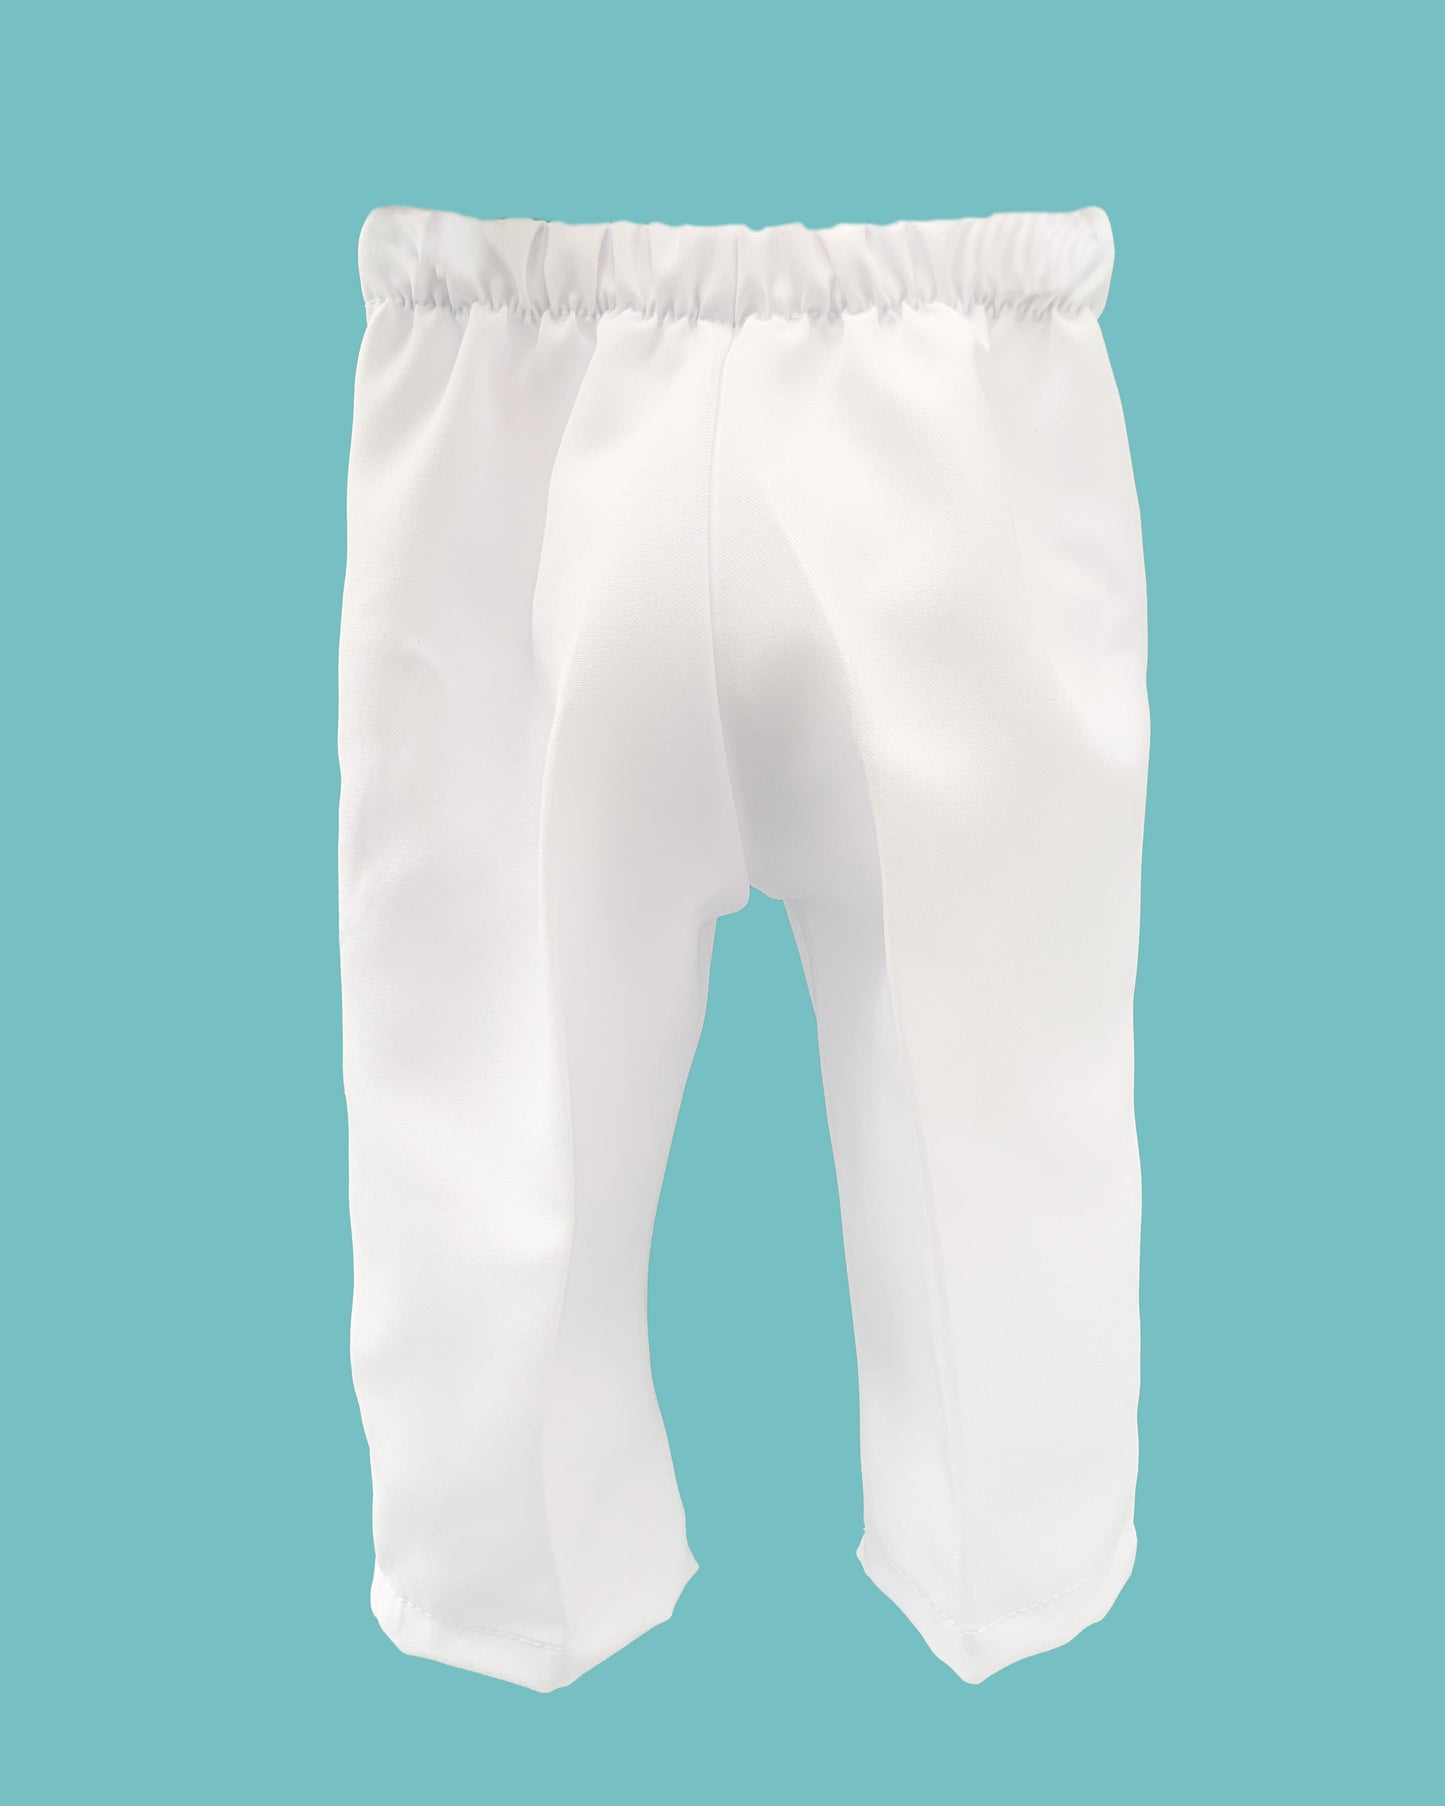 Traje 4 piezas tirantes blancos estilo pantalón o short